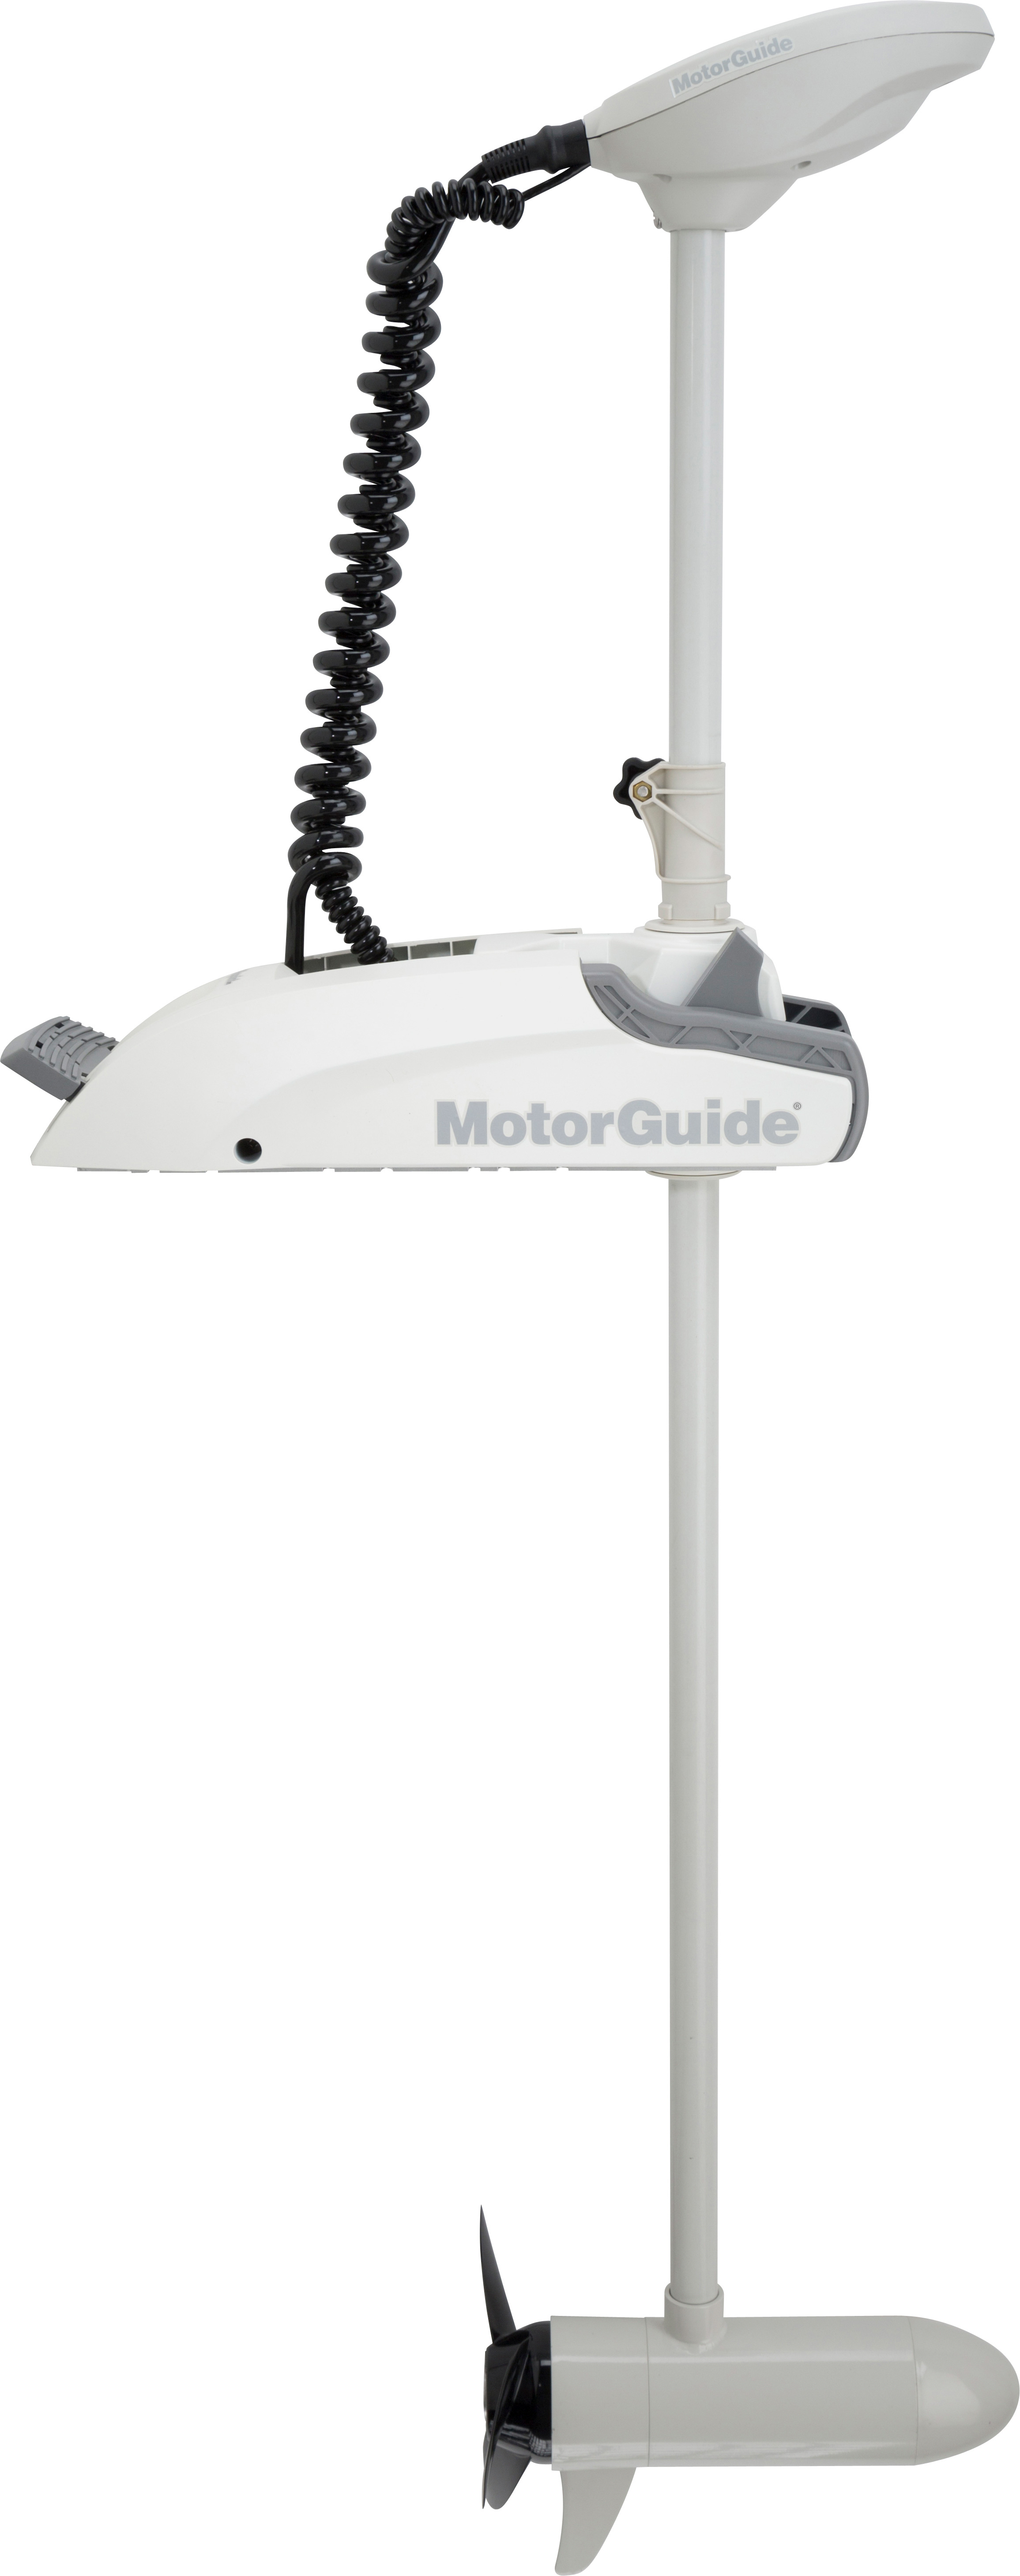 MotorGuide Xi3 Pinpoint GPS dorgemotor for saltvann